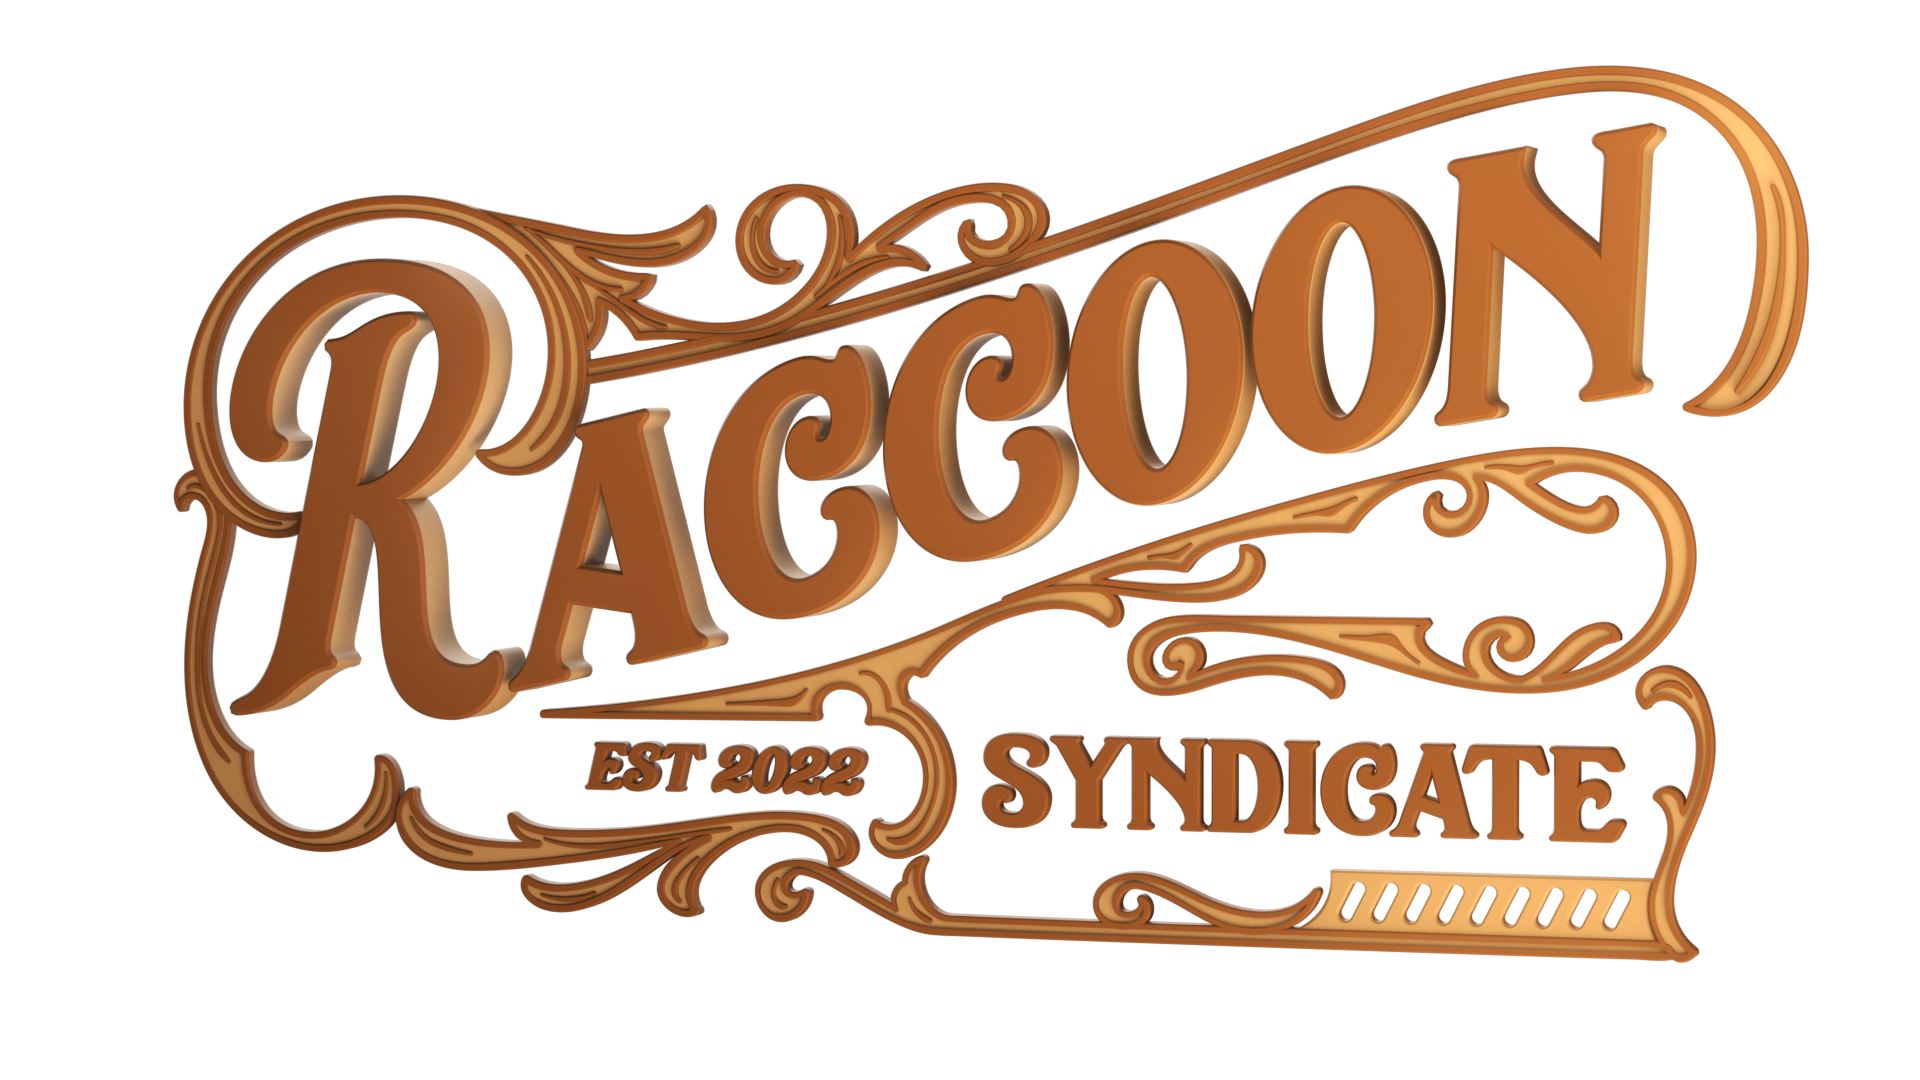 Raccoon Syndicate logo